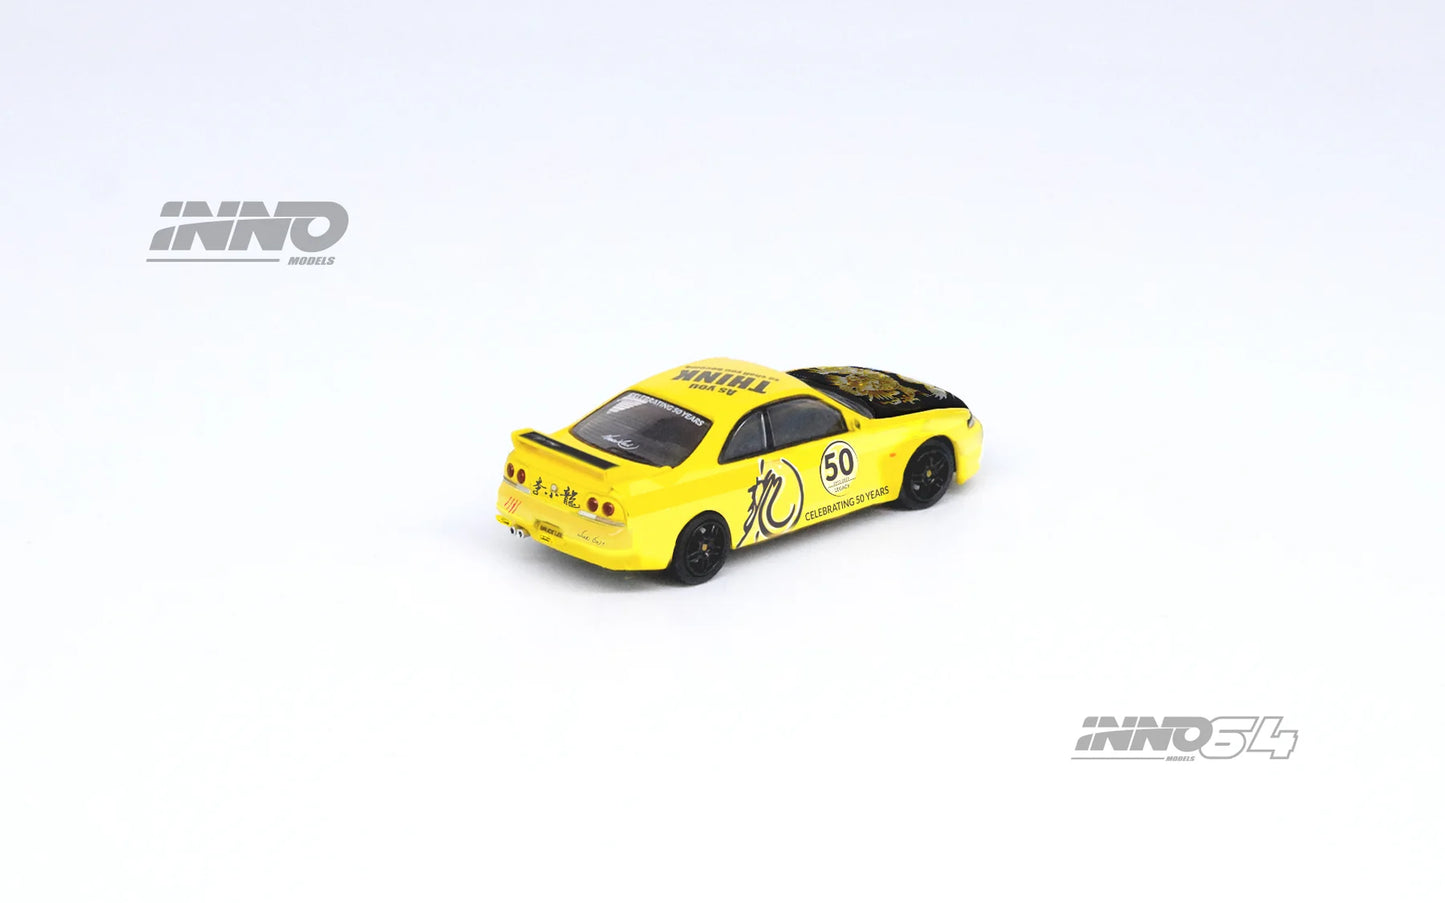 Inno64 Nissan Skyline GTR R33 Bruce Lee Yellow Black 1:64